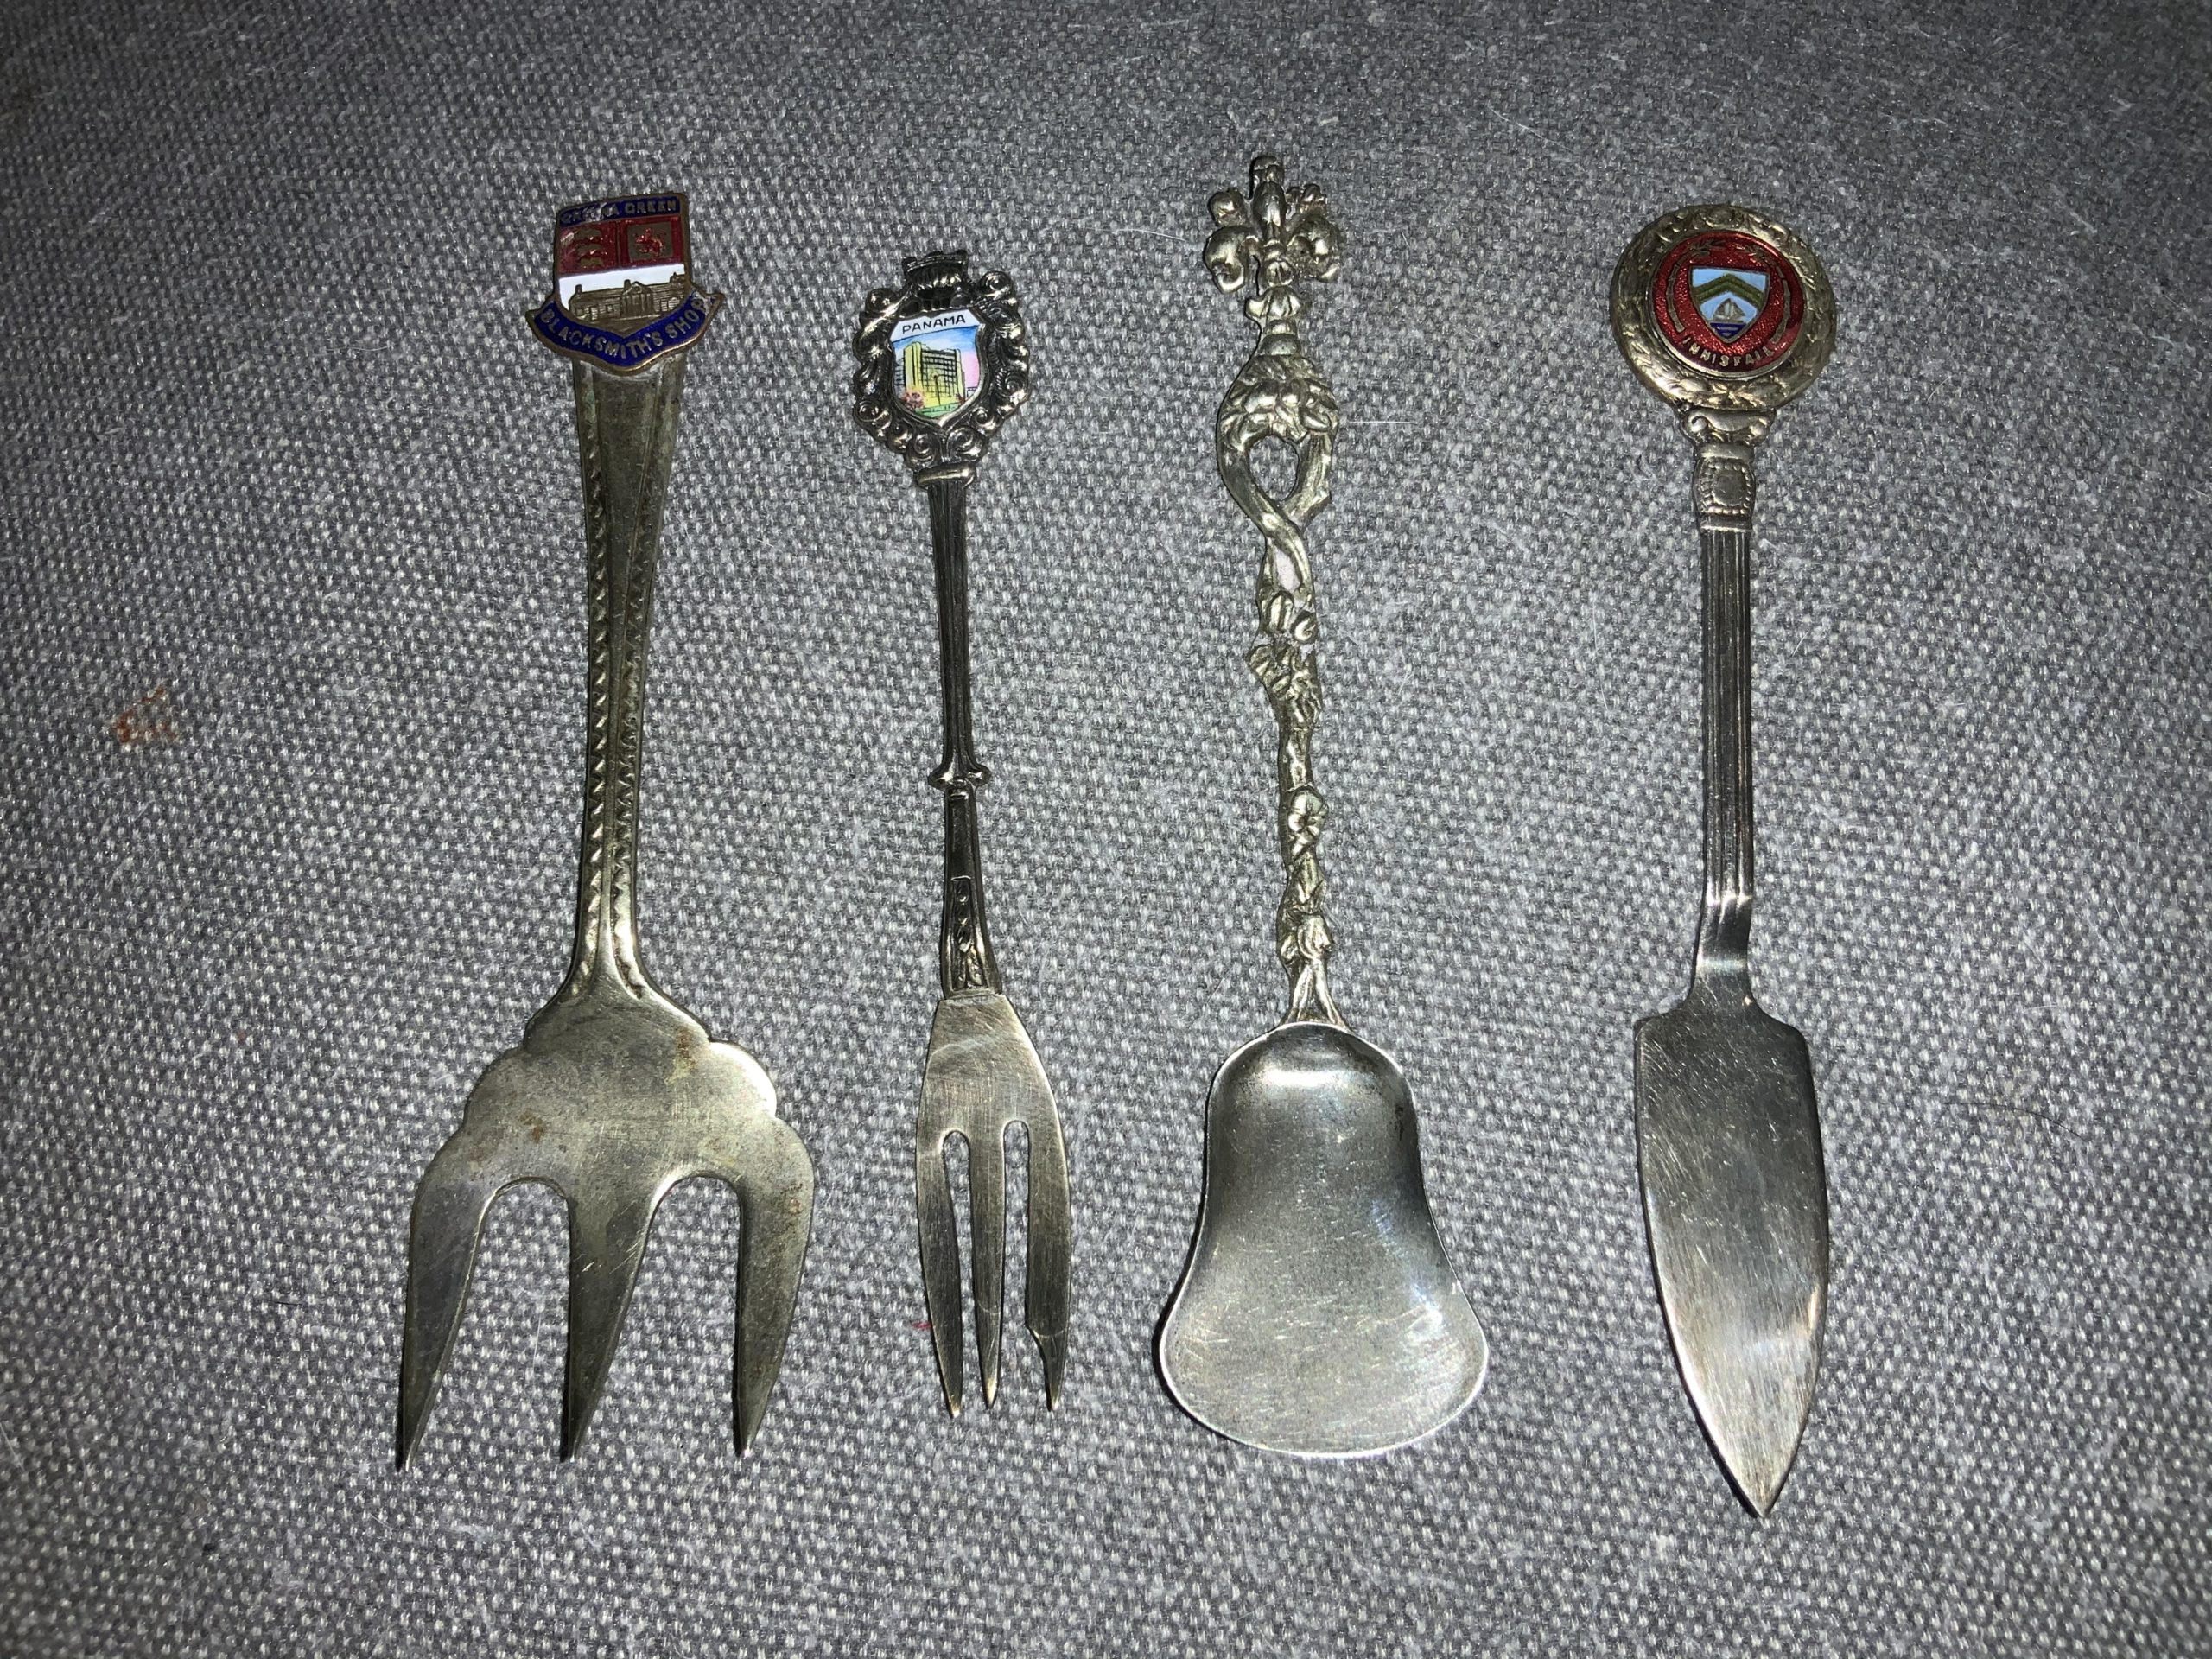 Antique spoons an Australian treat